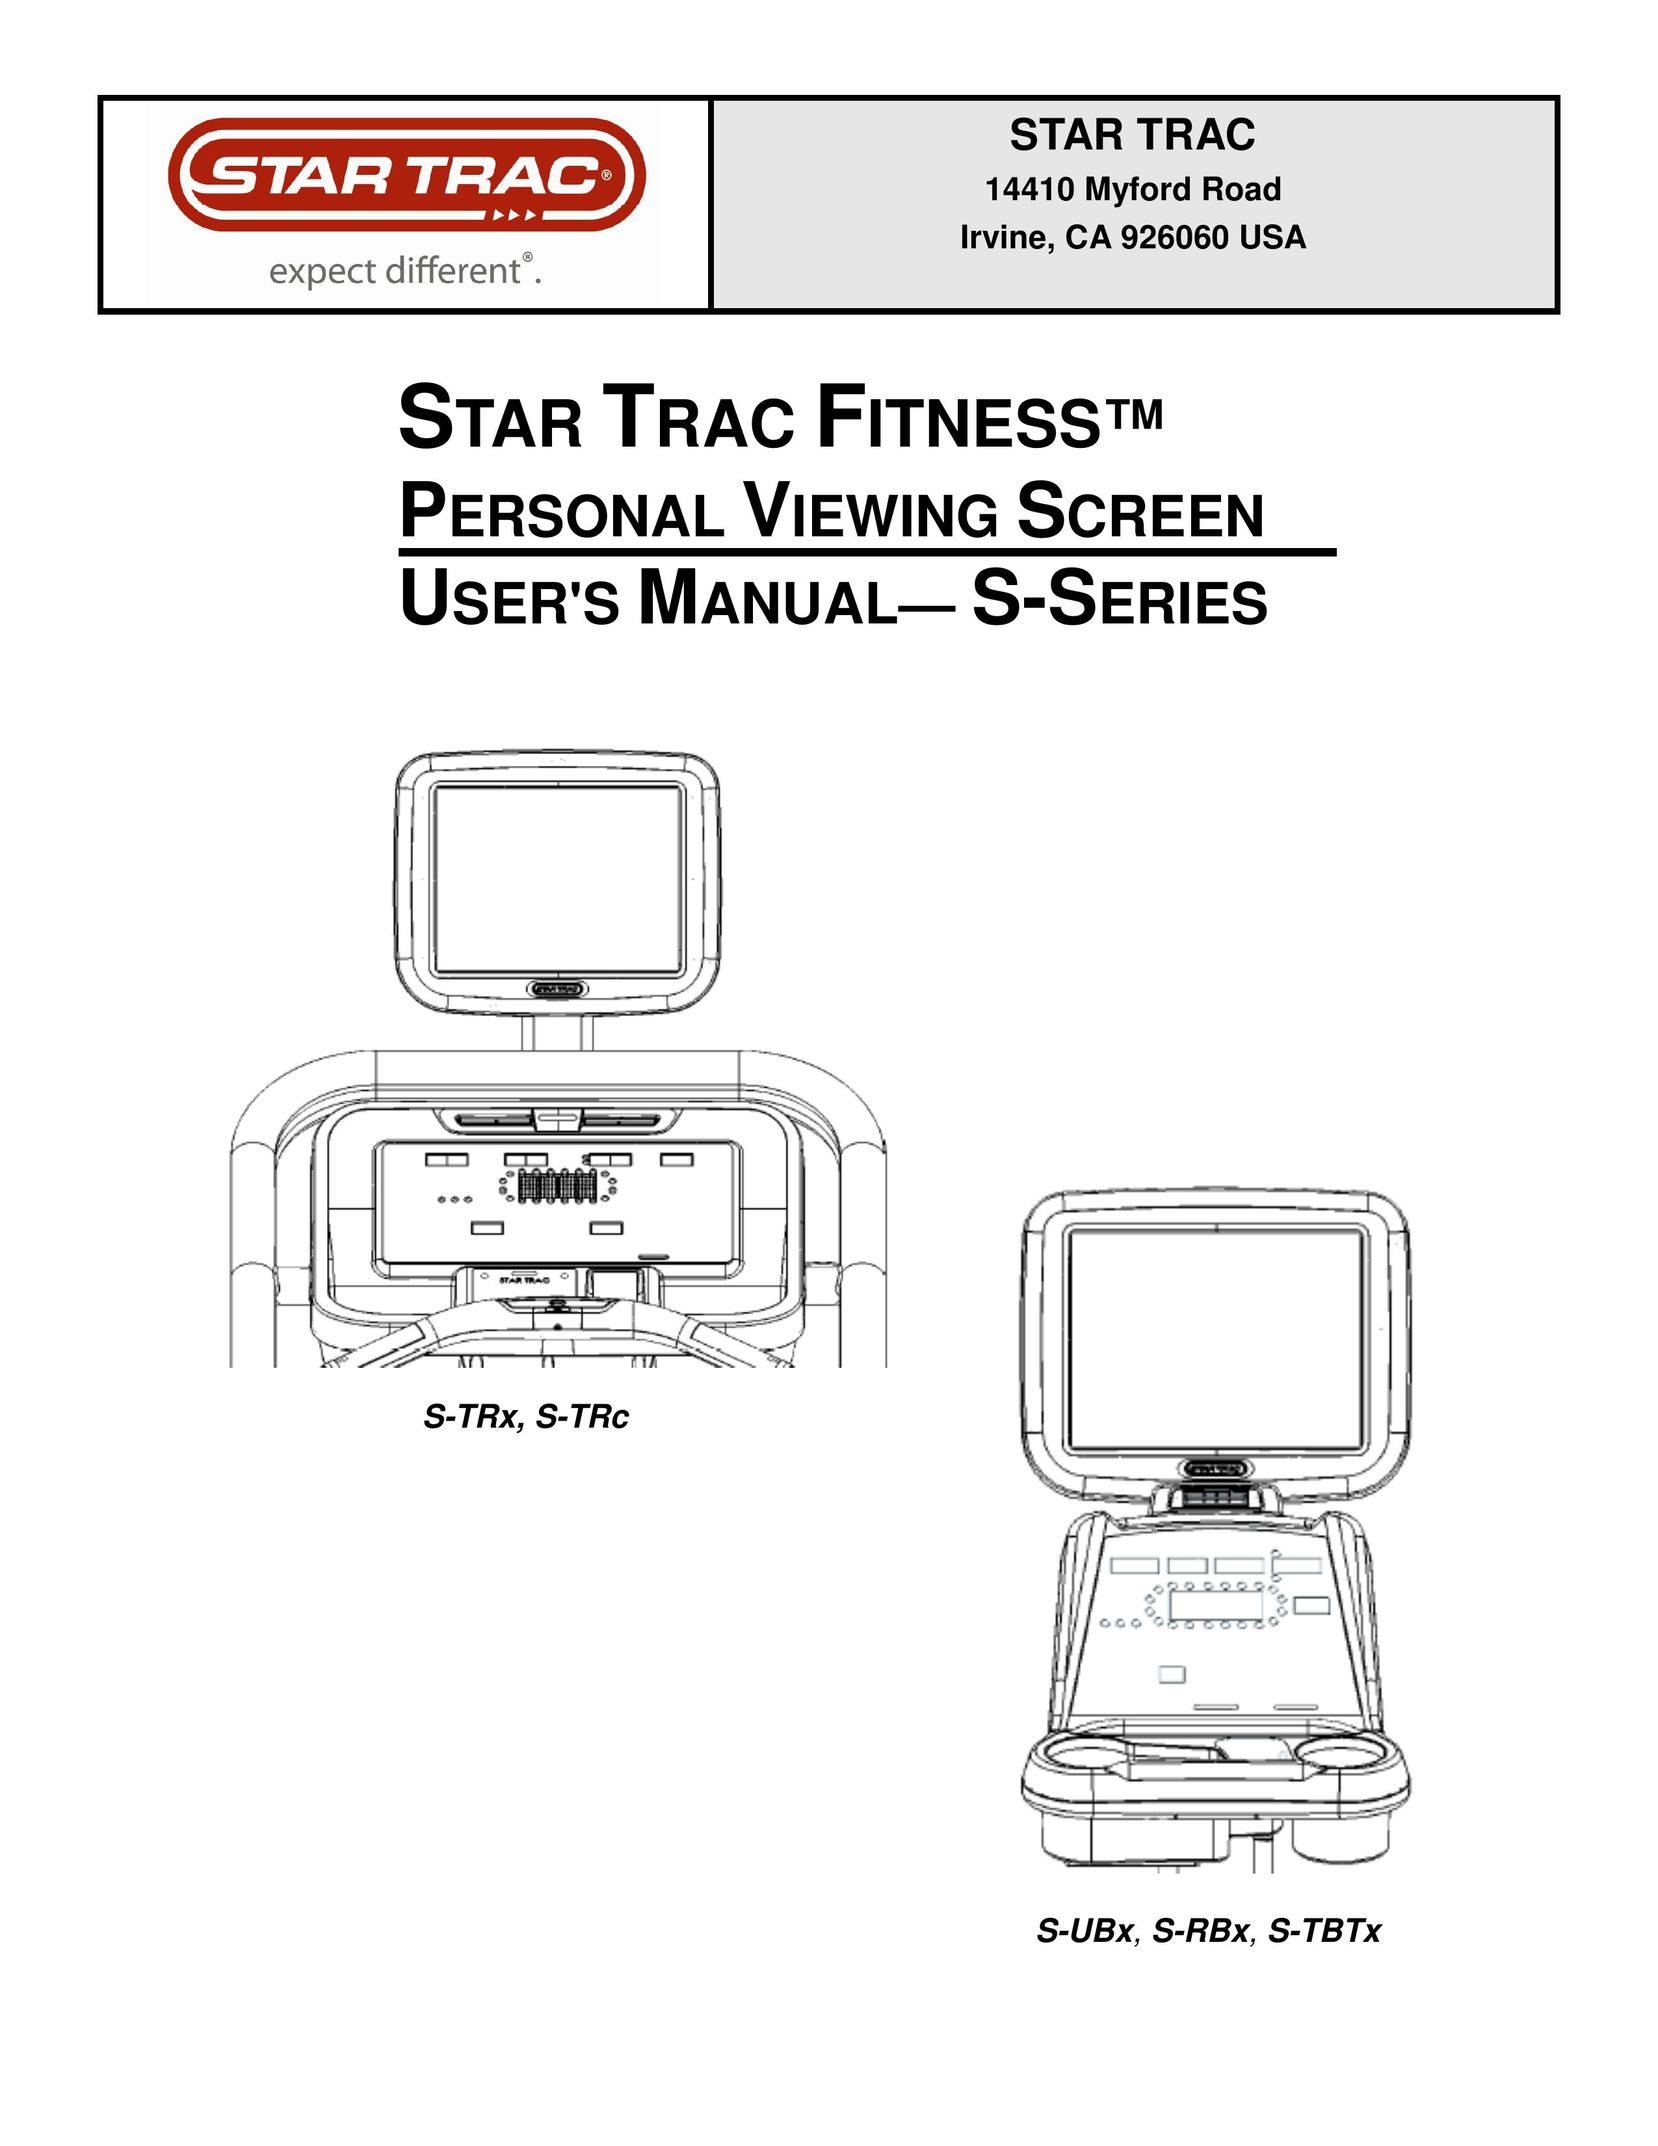 Star Trac S-TRX Fitness Electronics User Manual